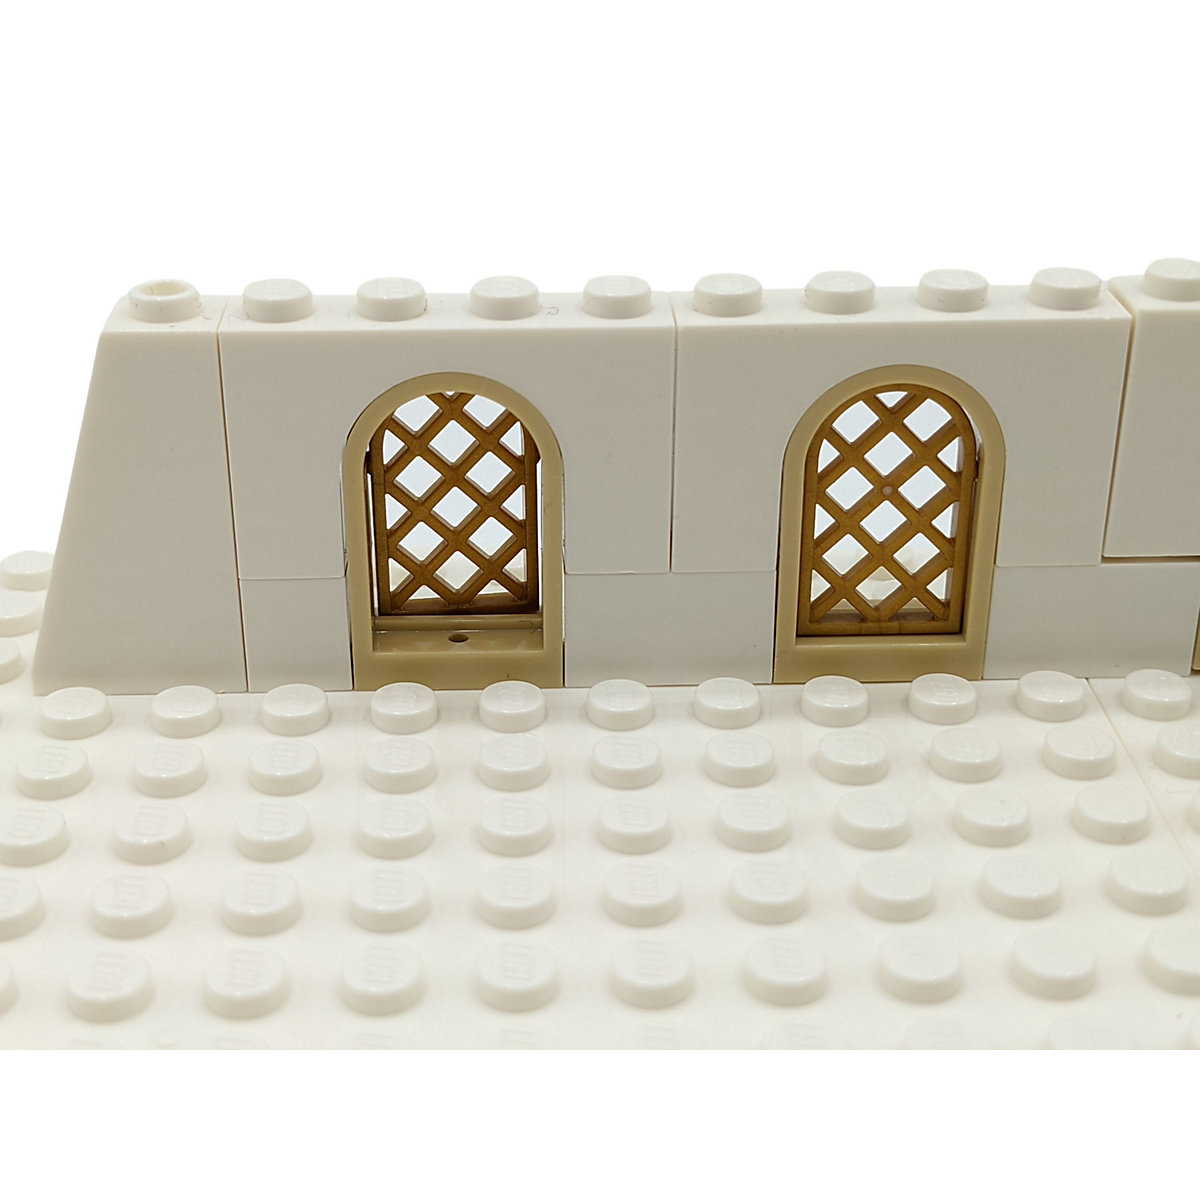 LEGO®MOC Mittelalter Fenster Mauer Ritter Burg weiss beige 19 Teile neu